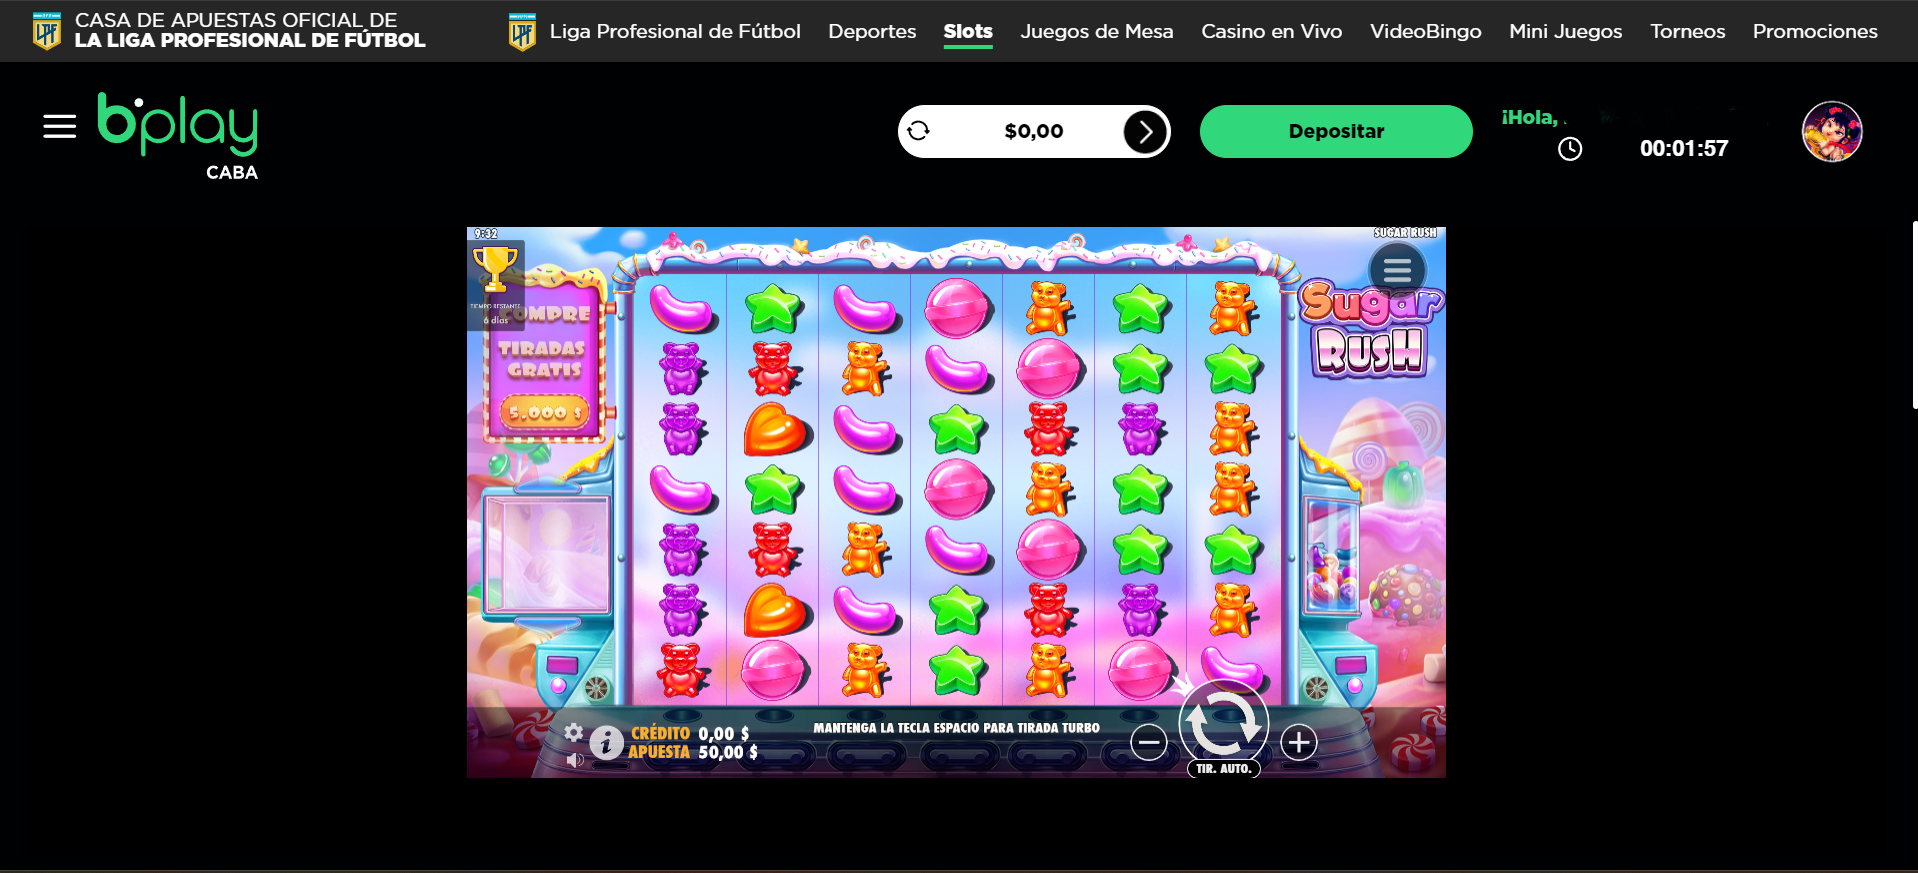 Sugar Rush en Bplay Casino online Argentina